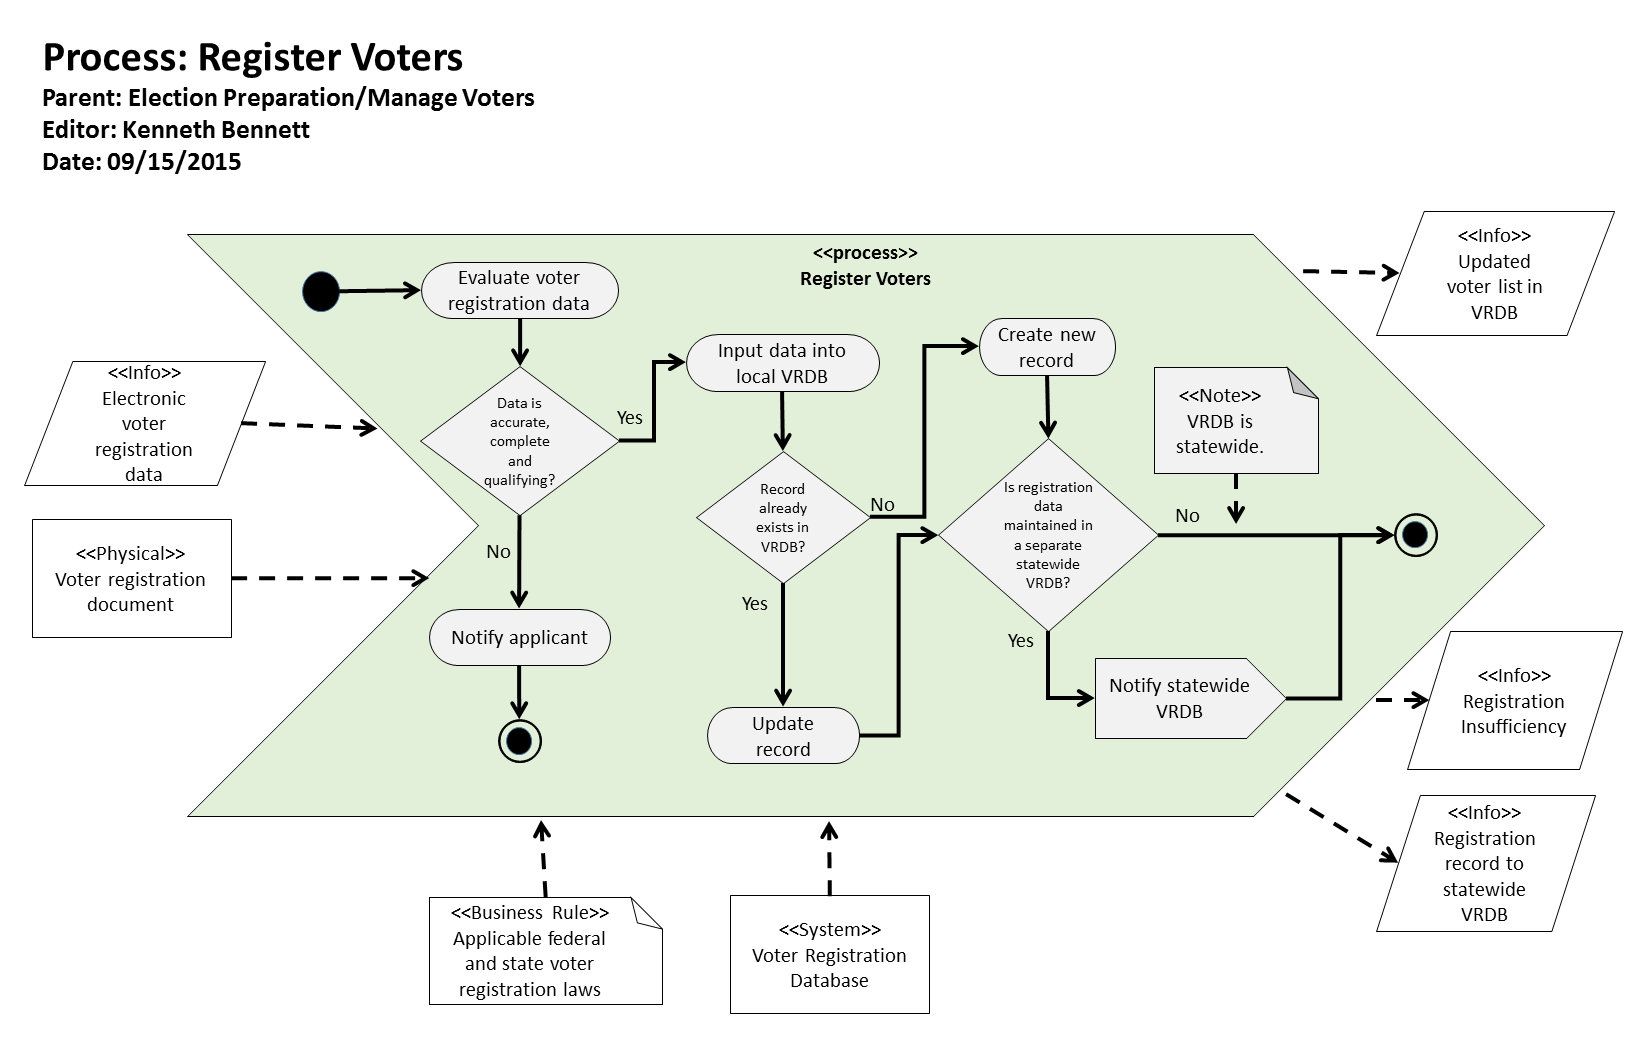 KB Process: Process: Register Voters Logic